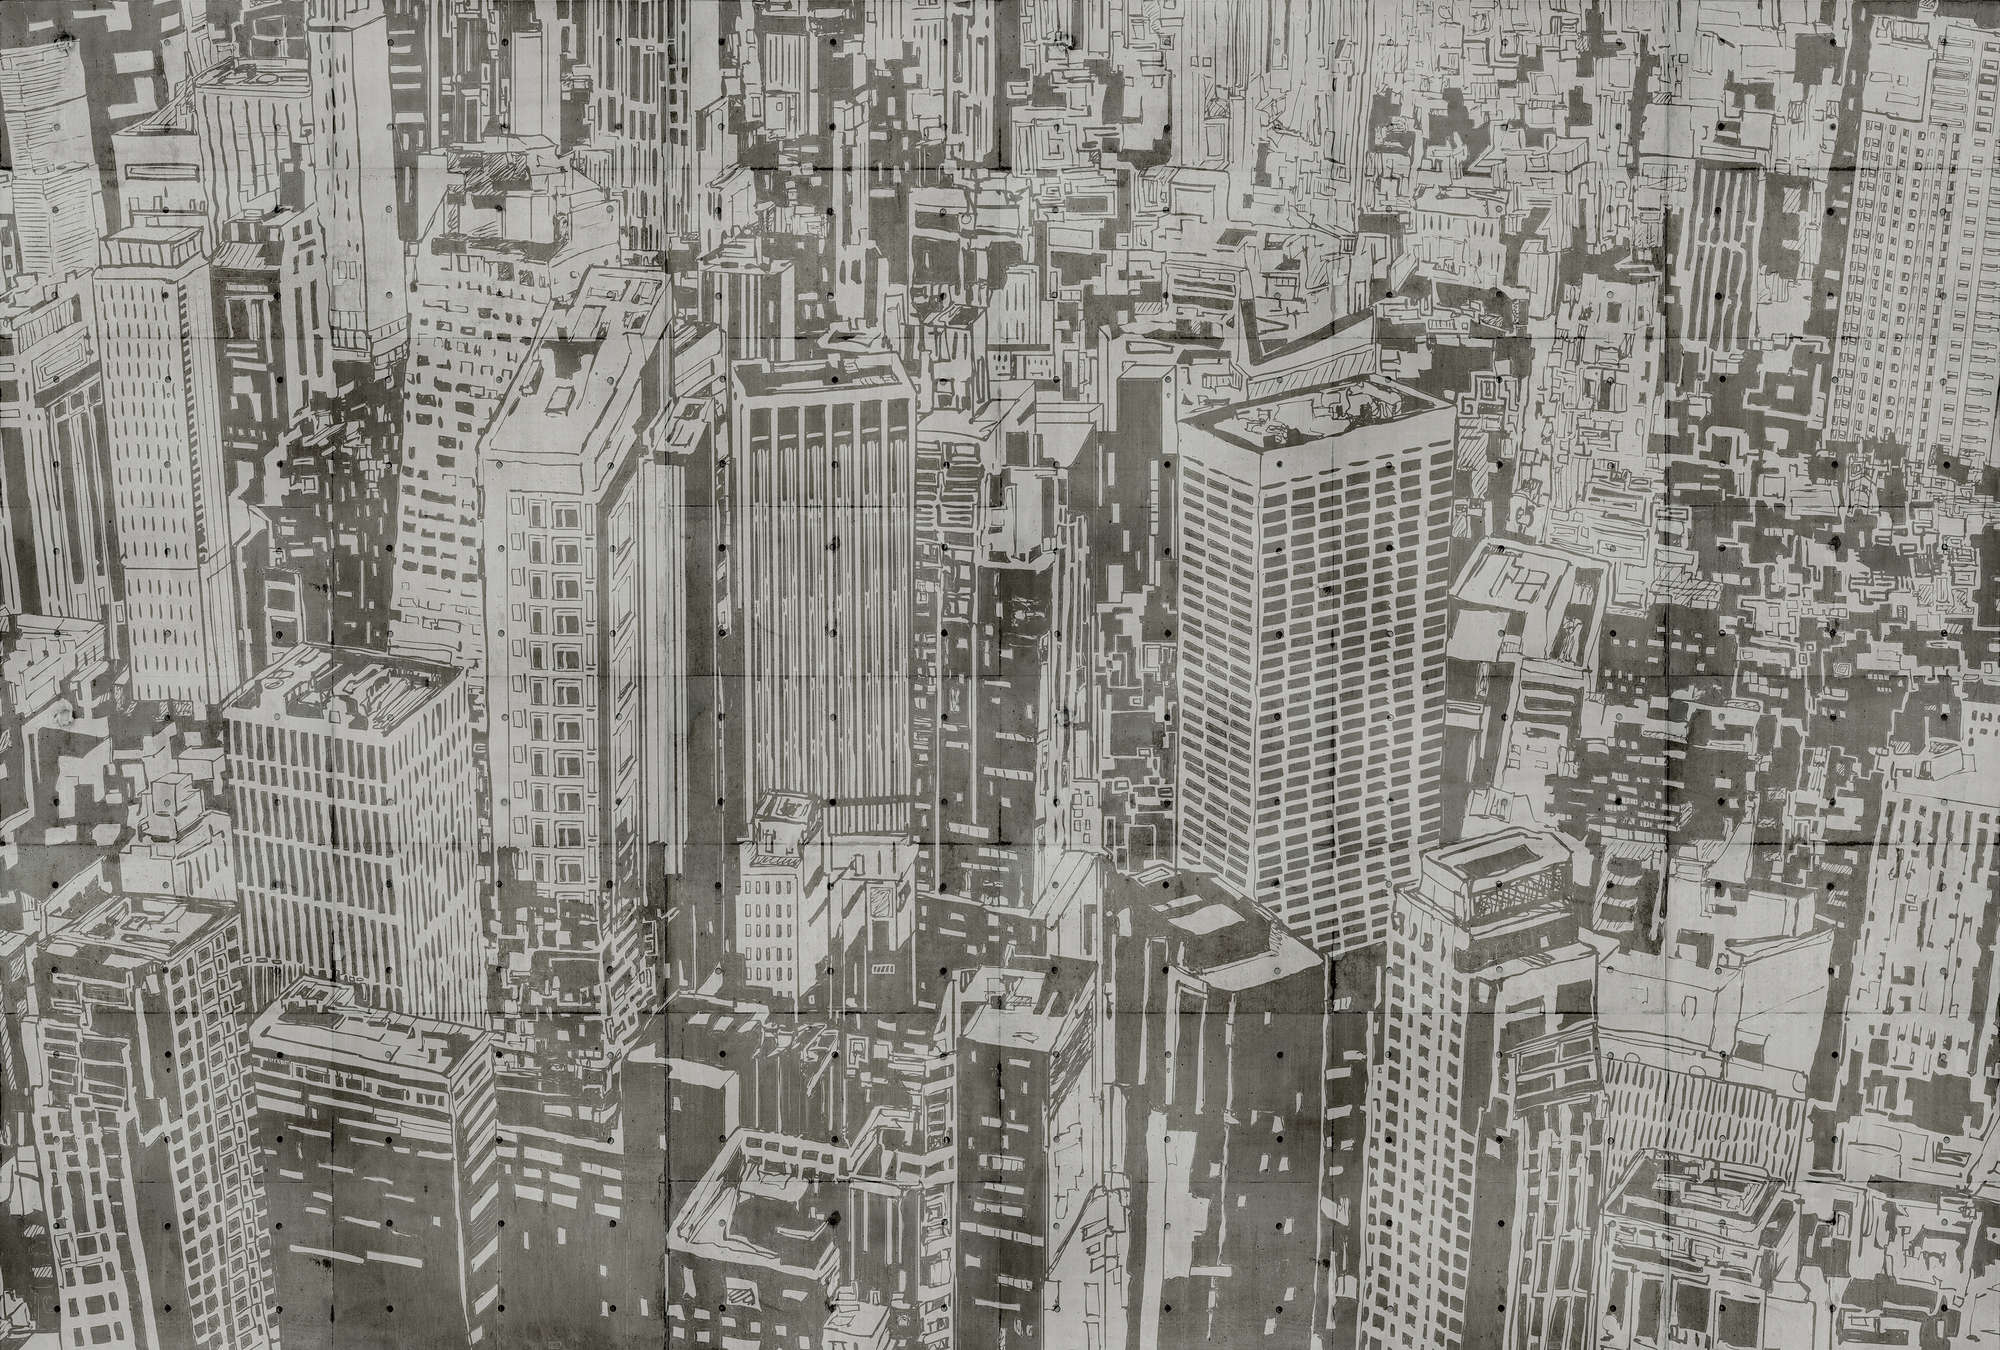             Downtown 2 - Concrete Structured Wallpaper in New York Look - Beige, Bruin | Matt Smooth Non-woven
        